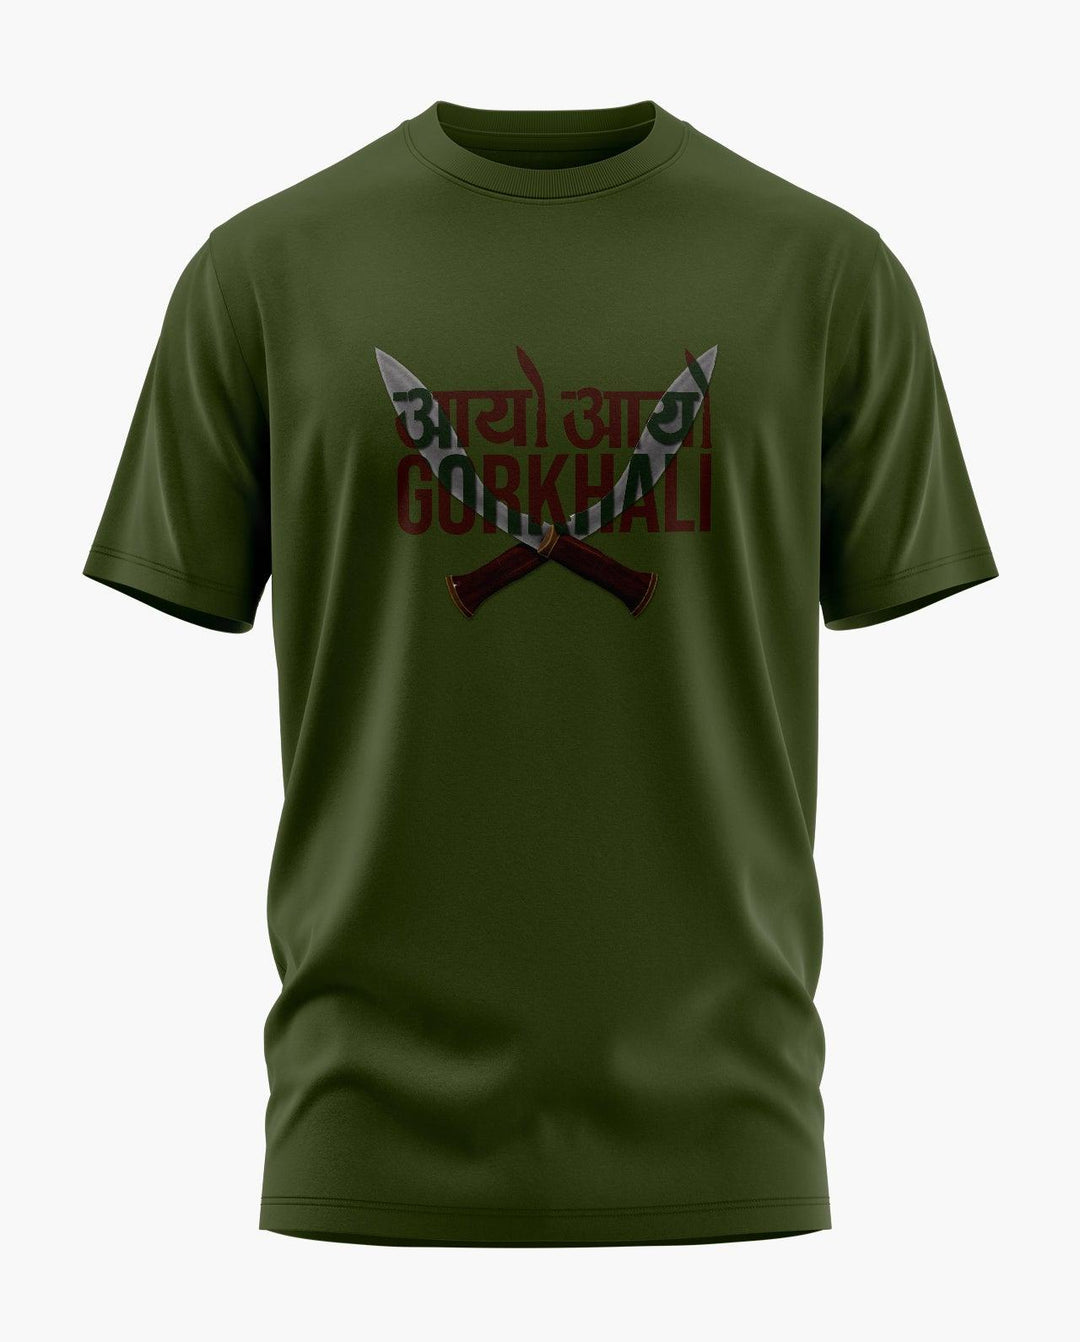 Aayo Gorkhali T-Shirt - Aero Armour